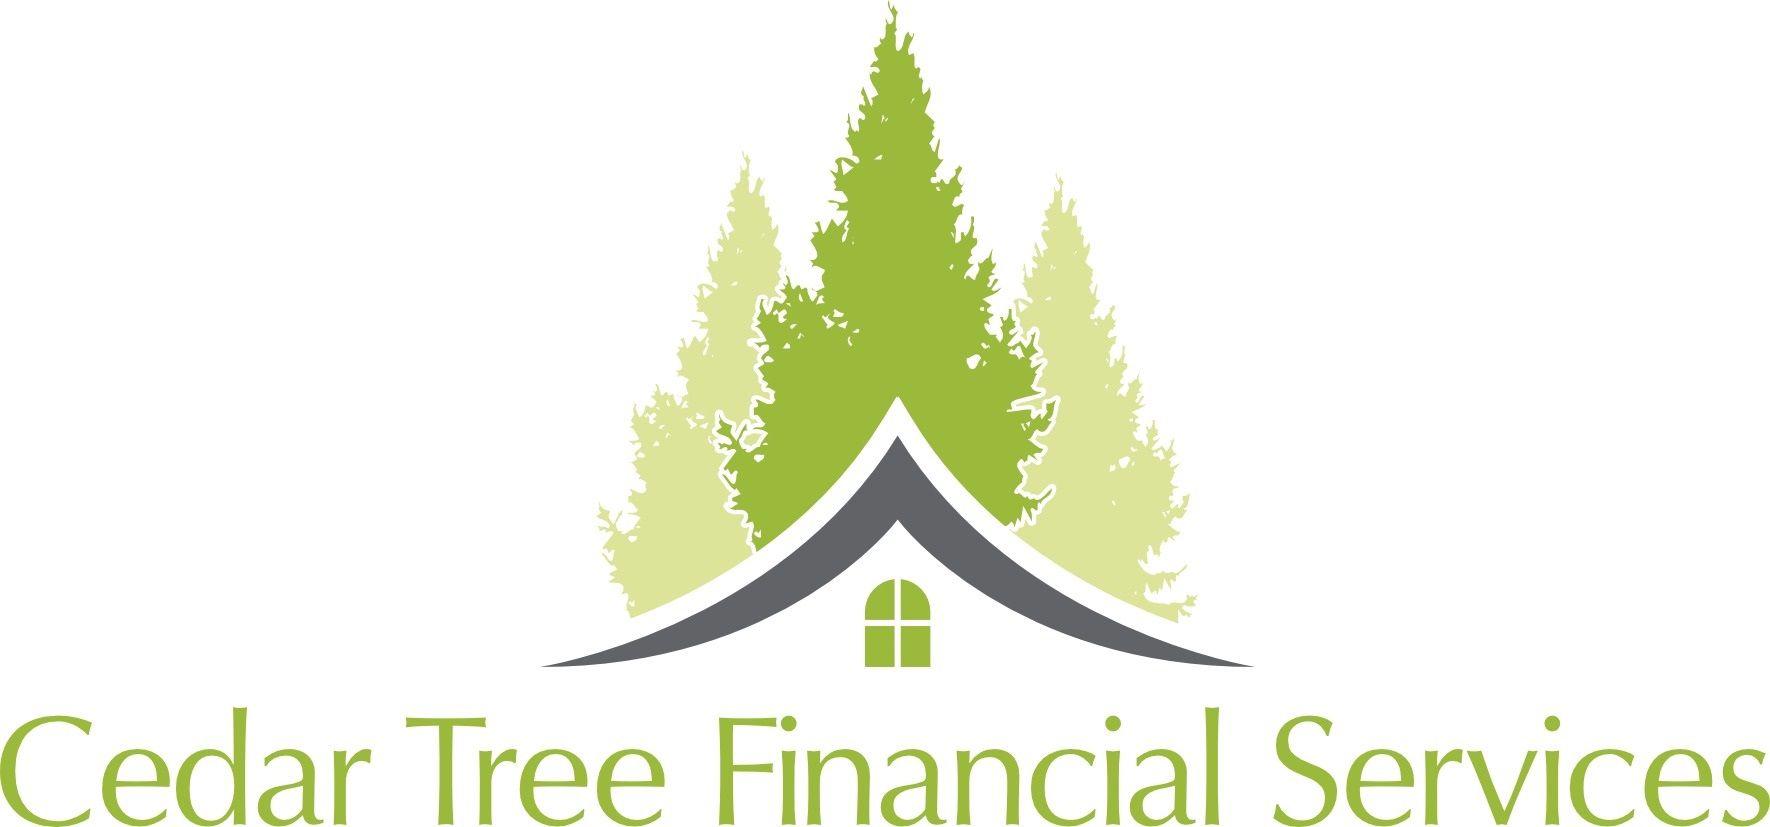 Cedar Tree Logo - Account Access